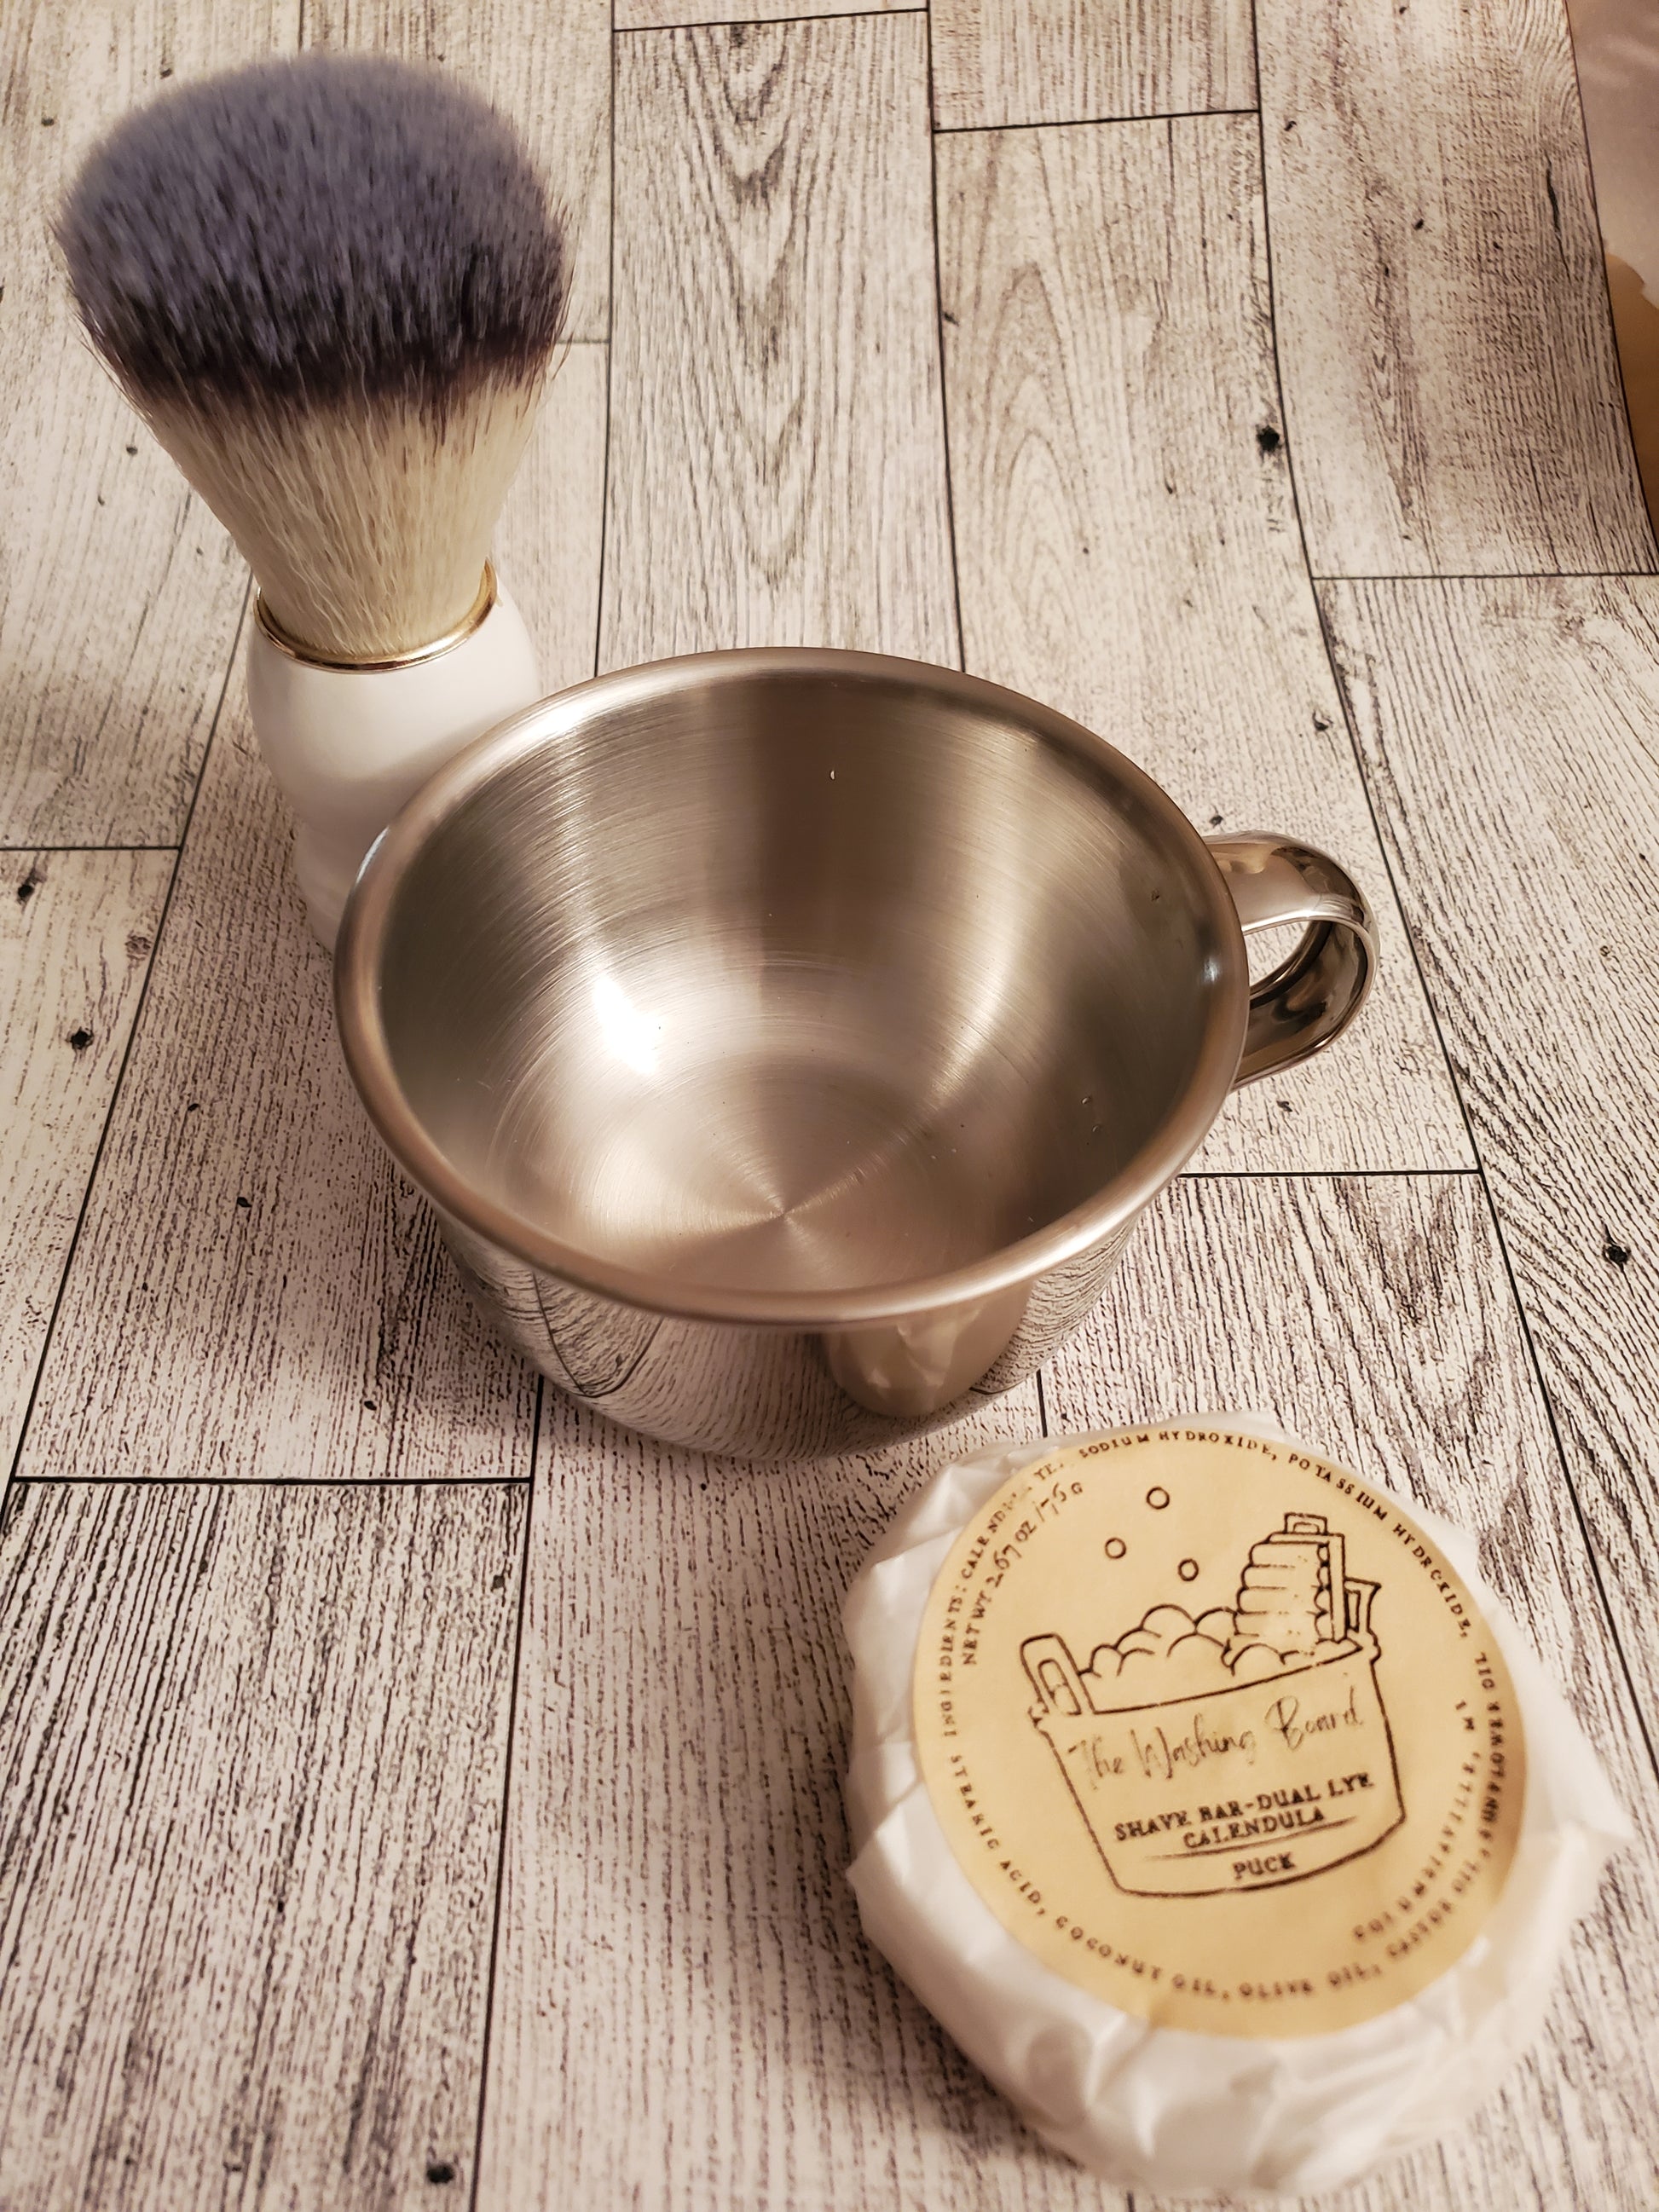 Shaving Kit with Stainless Steel Shaving Bowl,  White Brush and Dual Lye Shaving Soap Puck. 